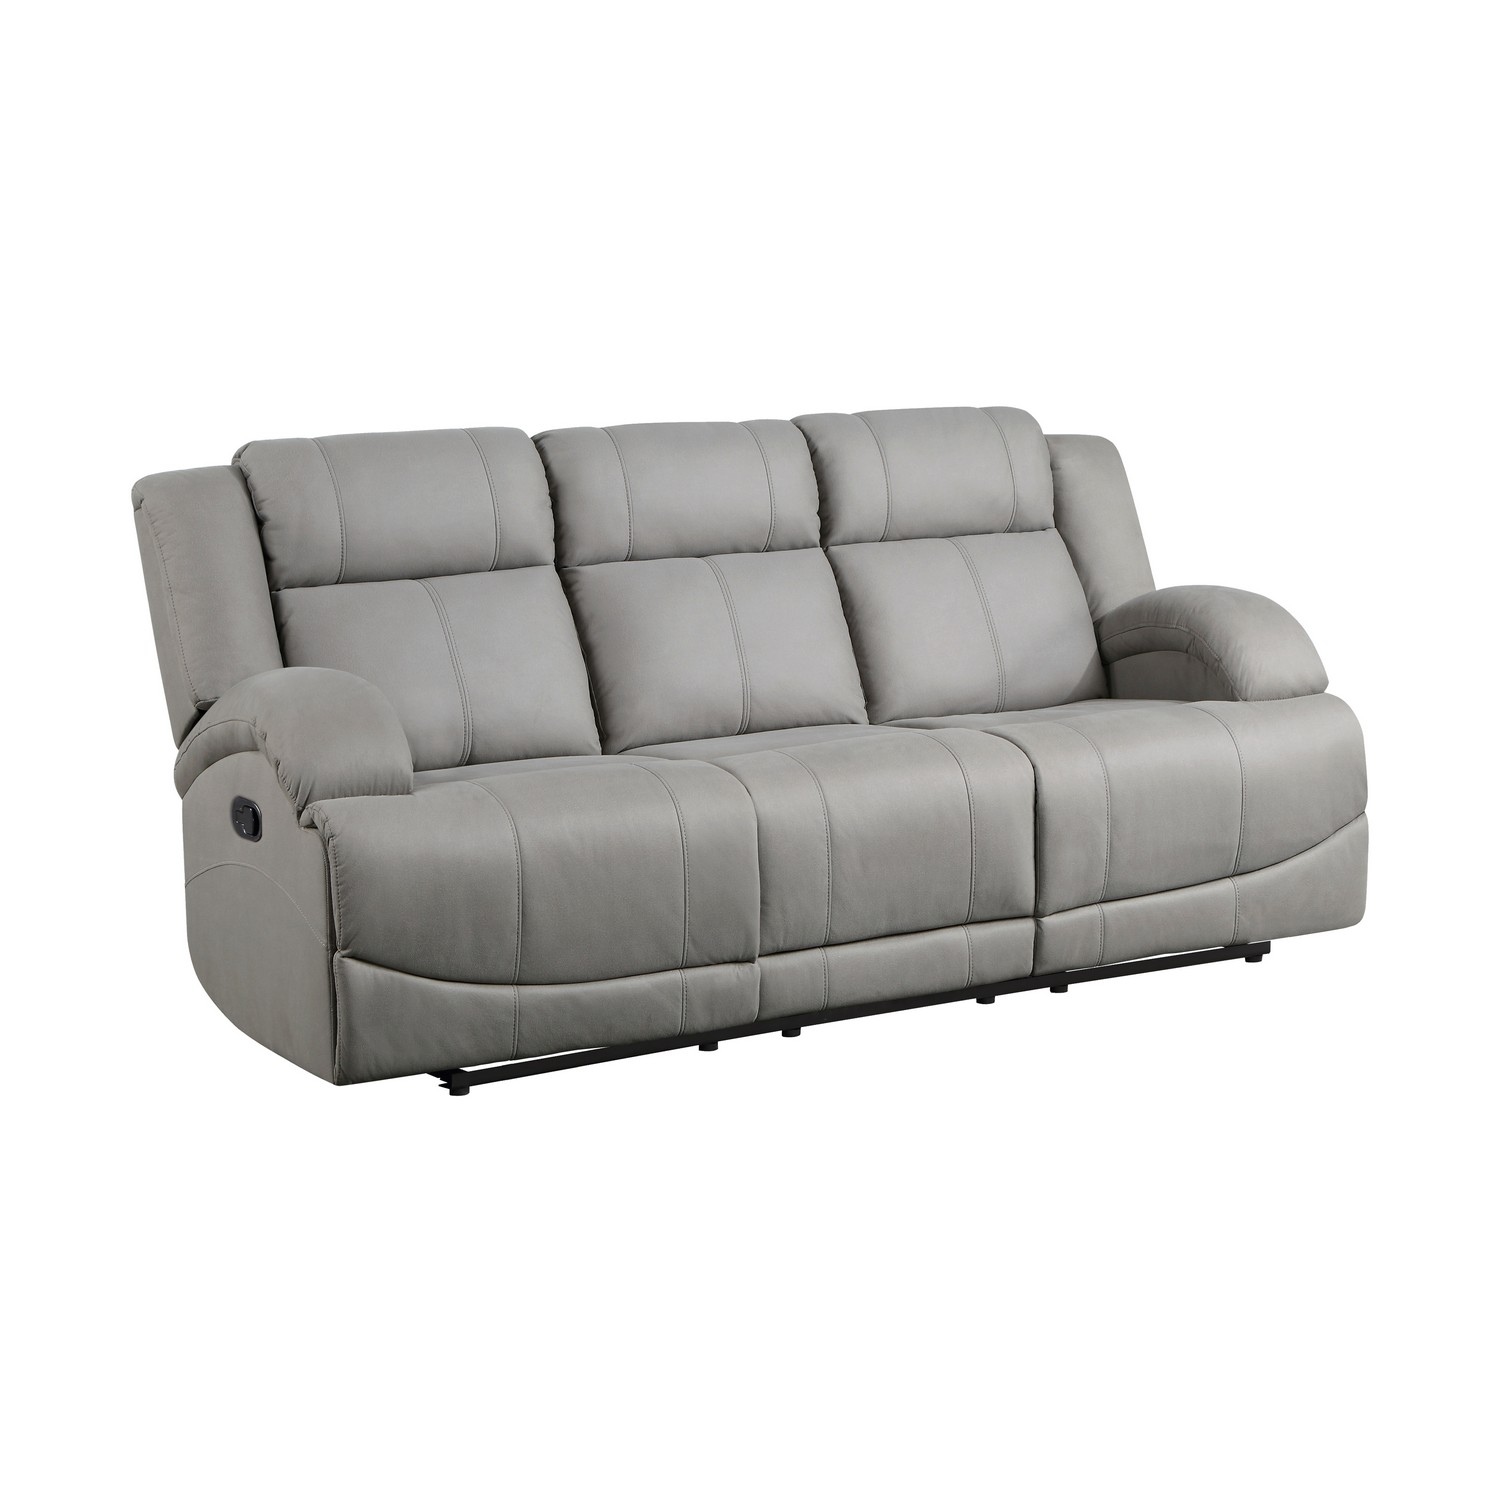 Homelegance Camryn Double Reclining Sofa - Gray